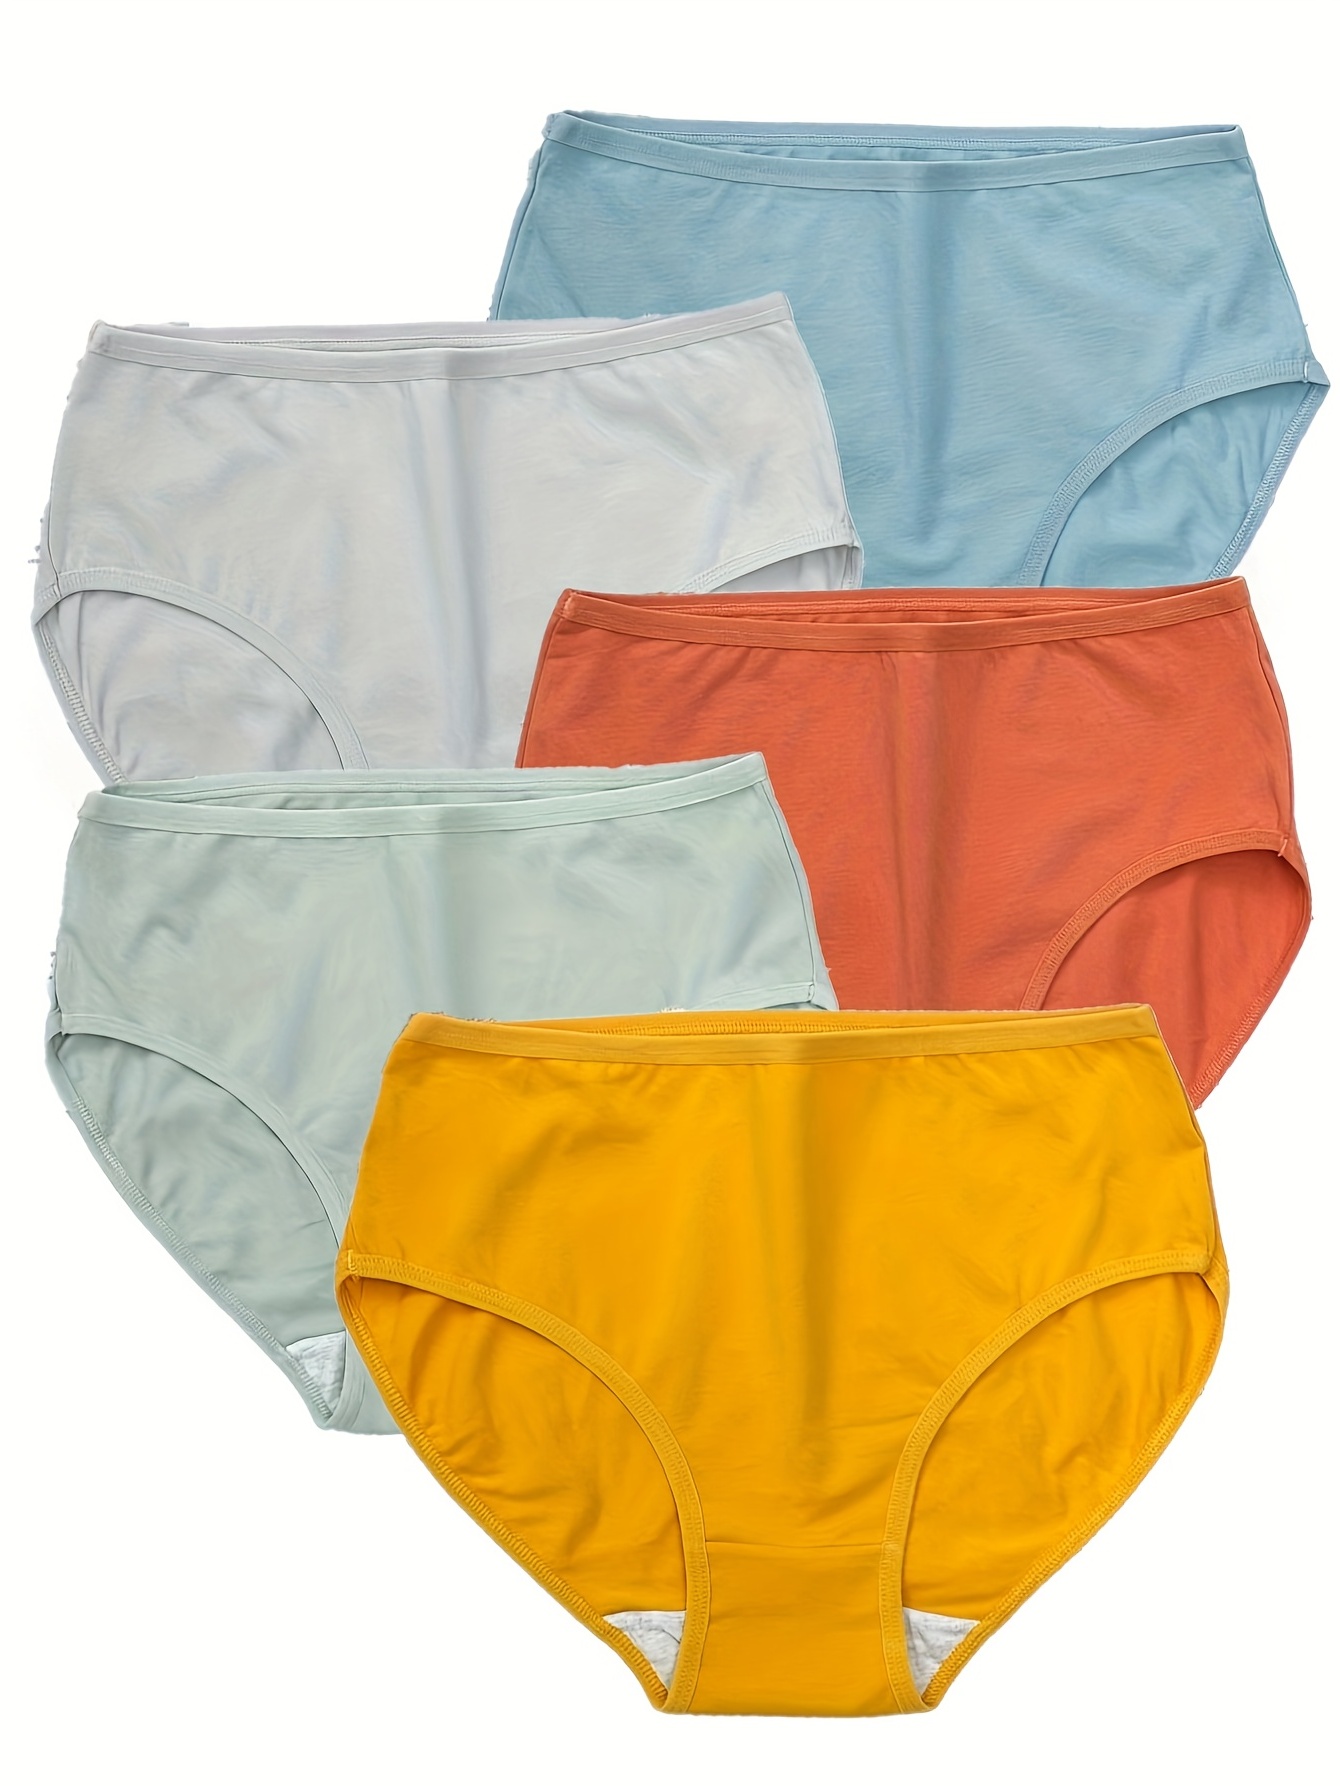 Everdries Leakproof Underwear, 5PCS Everdries Leakproof Underwear